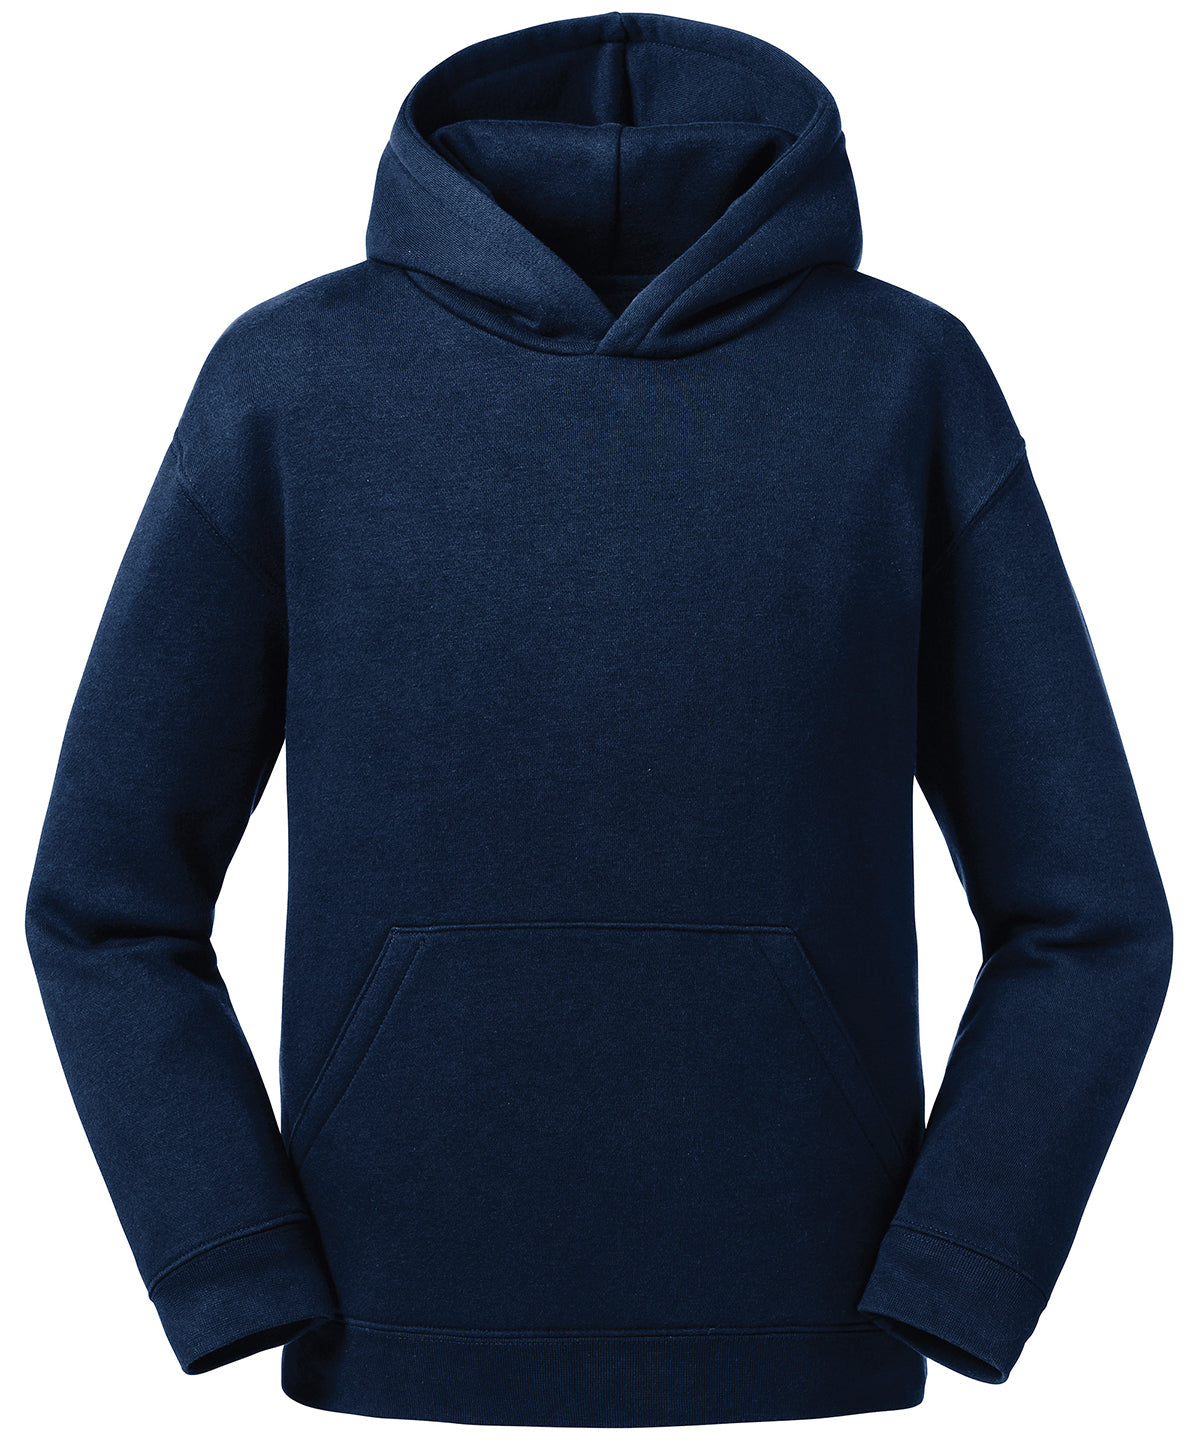 Hettupeysur - Kids Authentic Hooded Sweatshirt